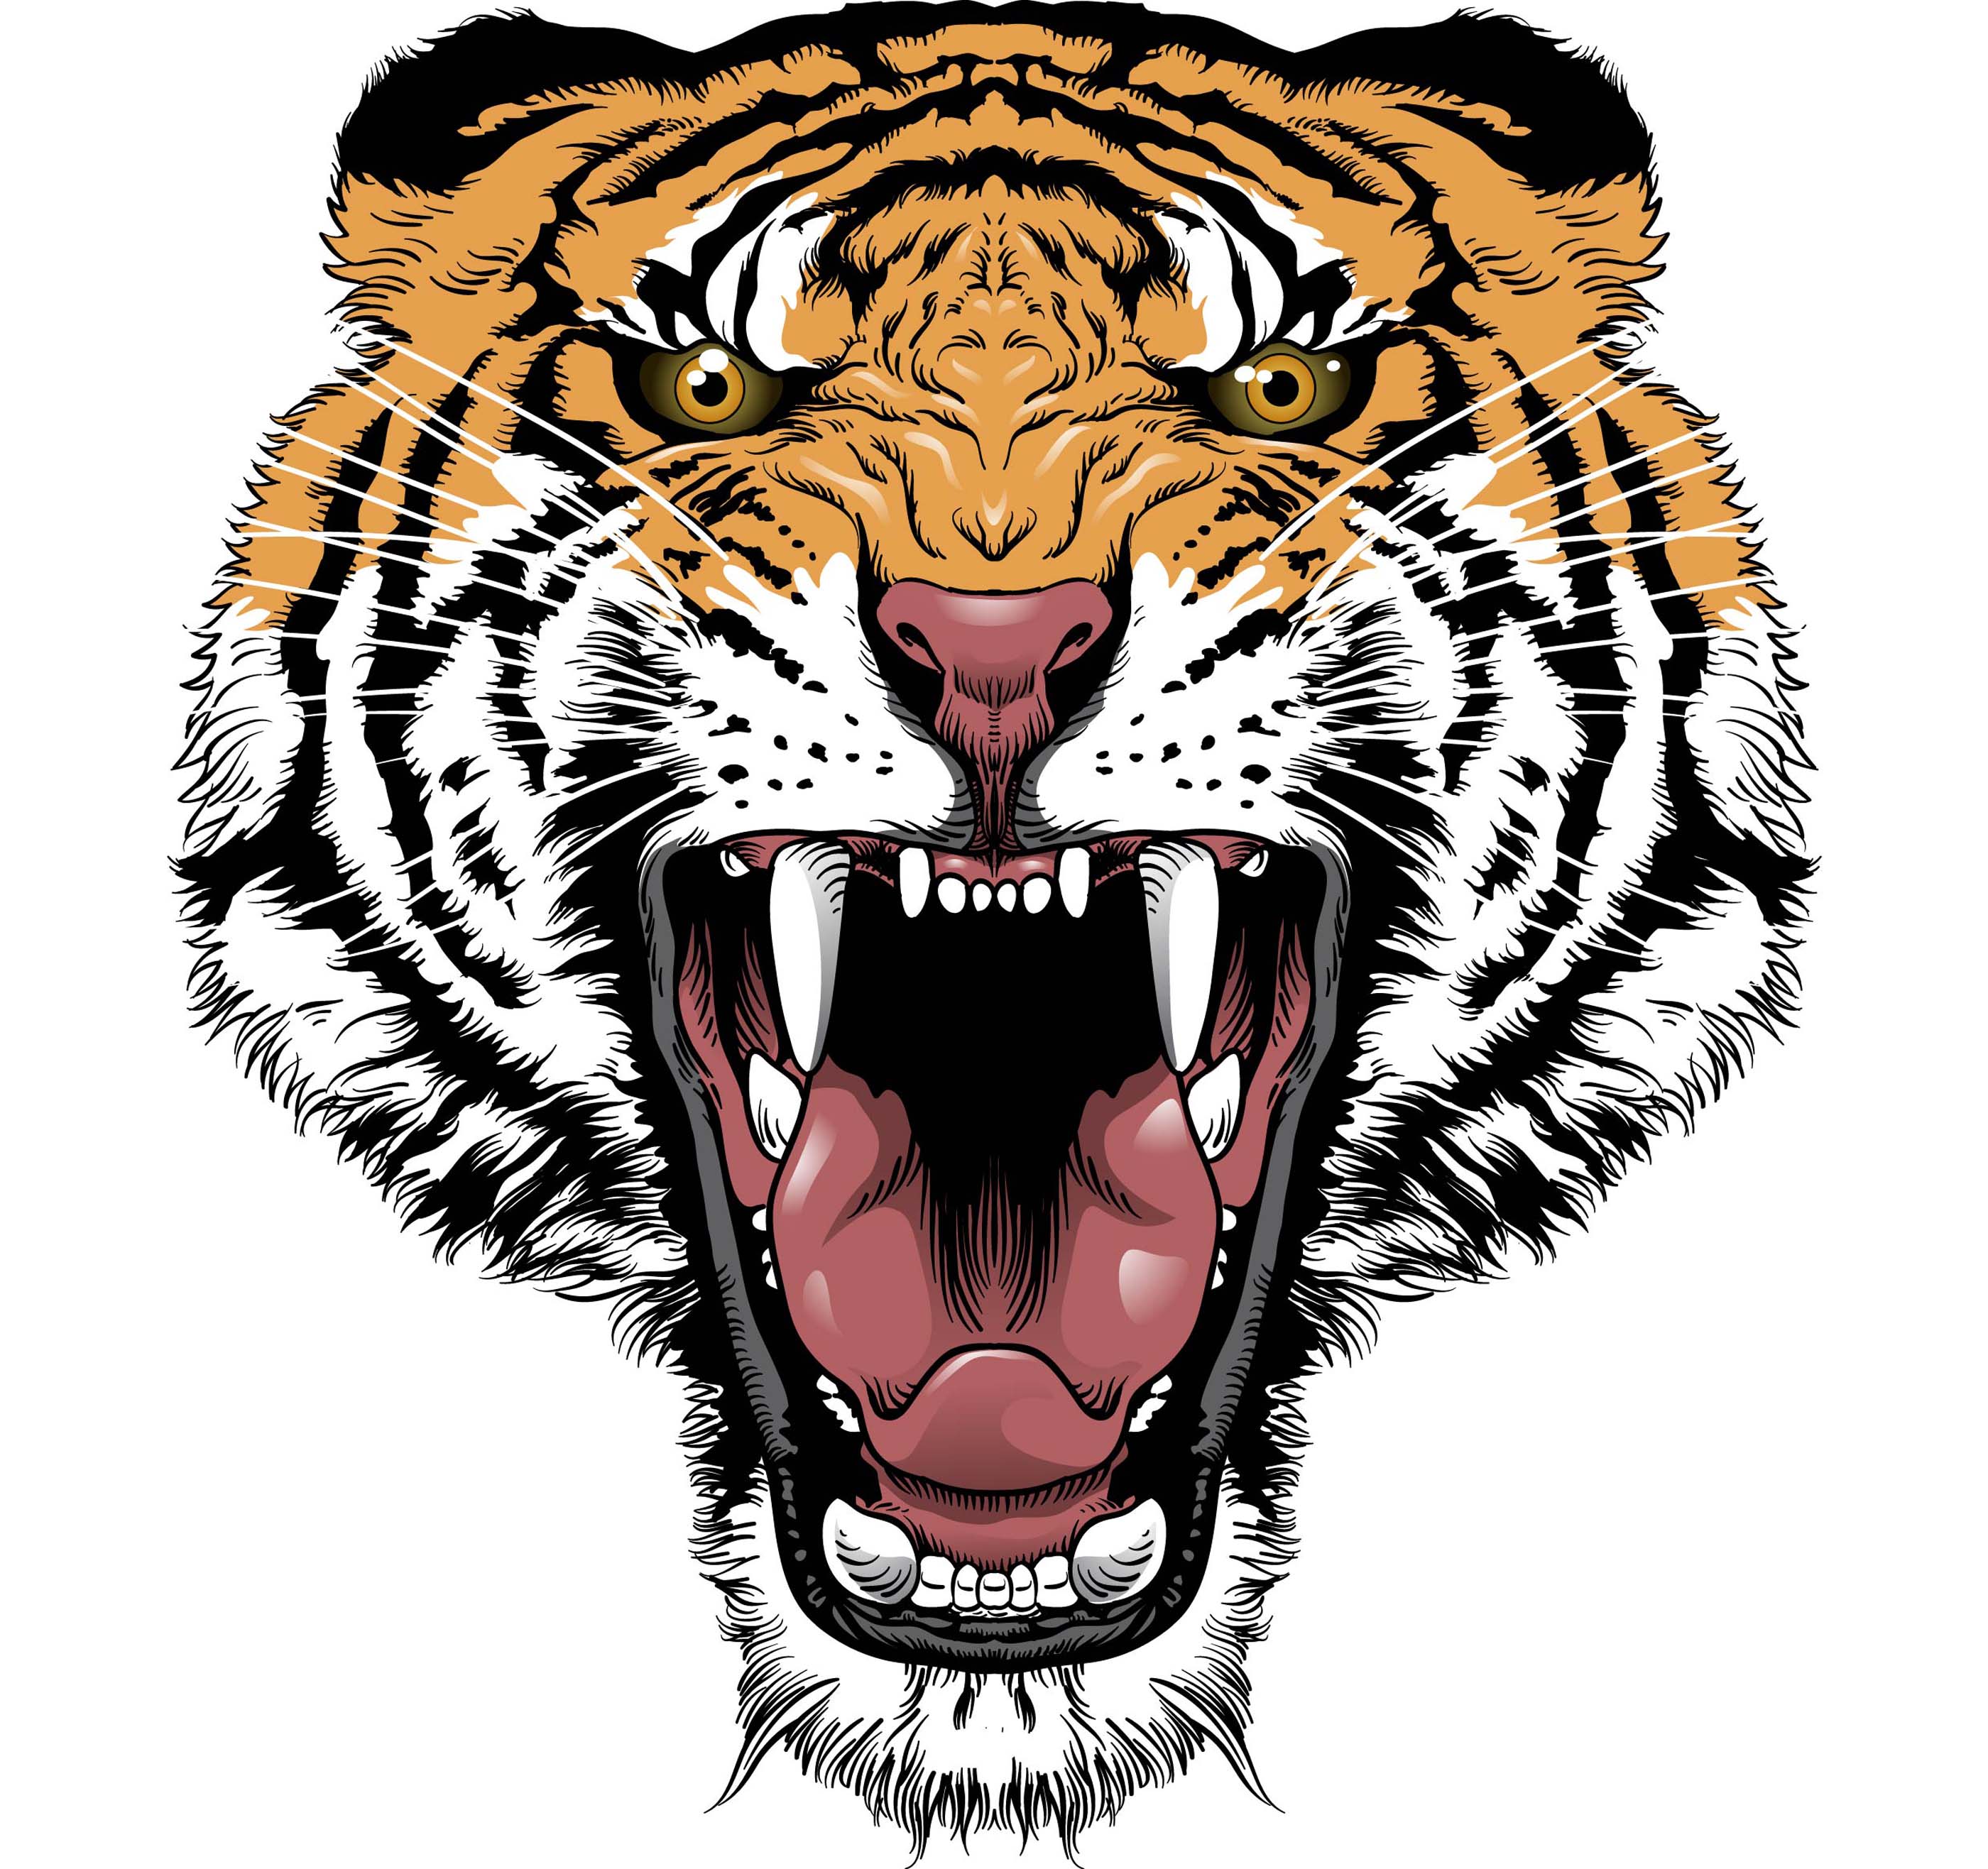 Impressive screaming tiger head tattoo design